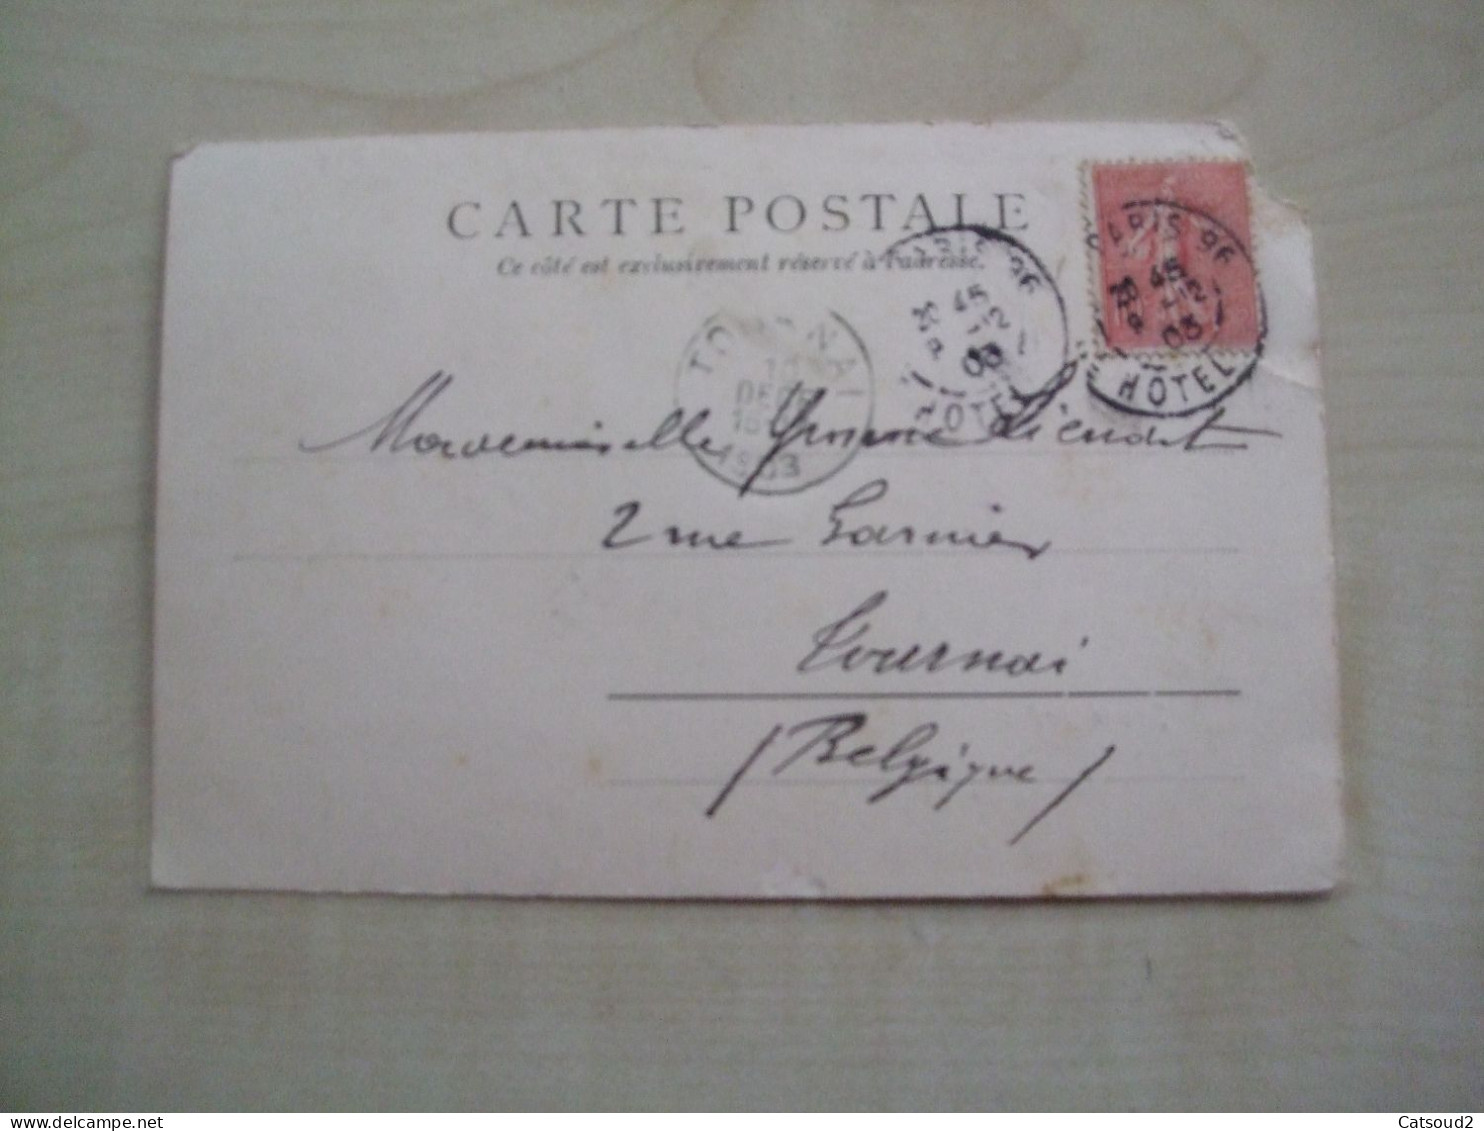 Carte Postale Ancienne 1903 PARIS Avenue Nicolas II - Panorama's